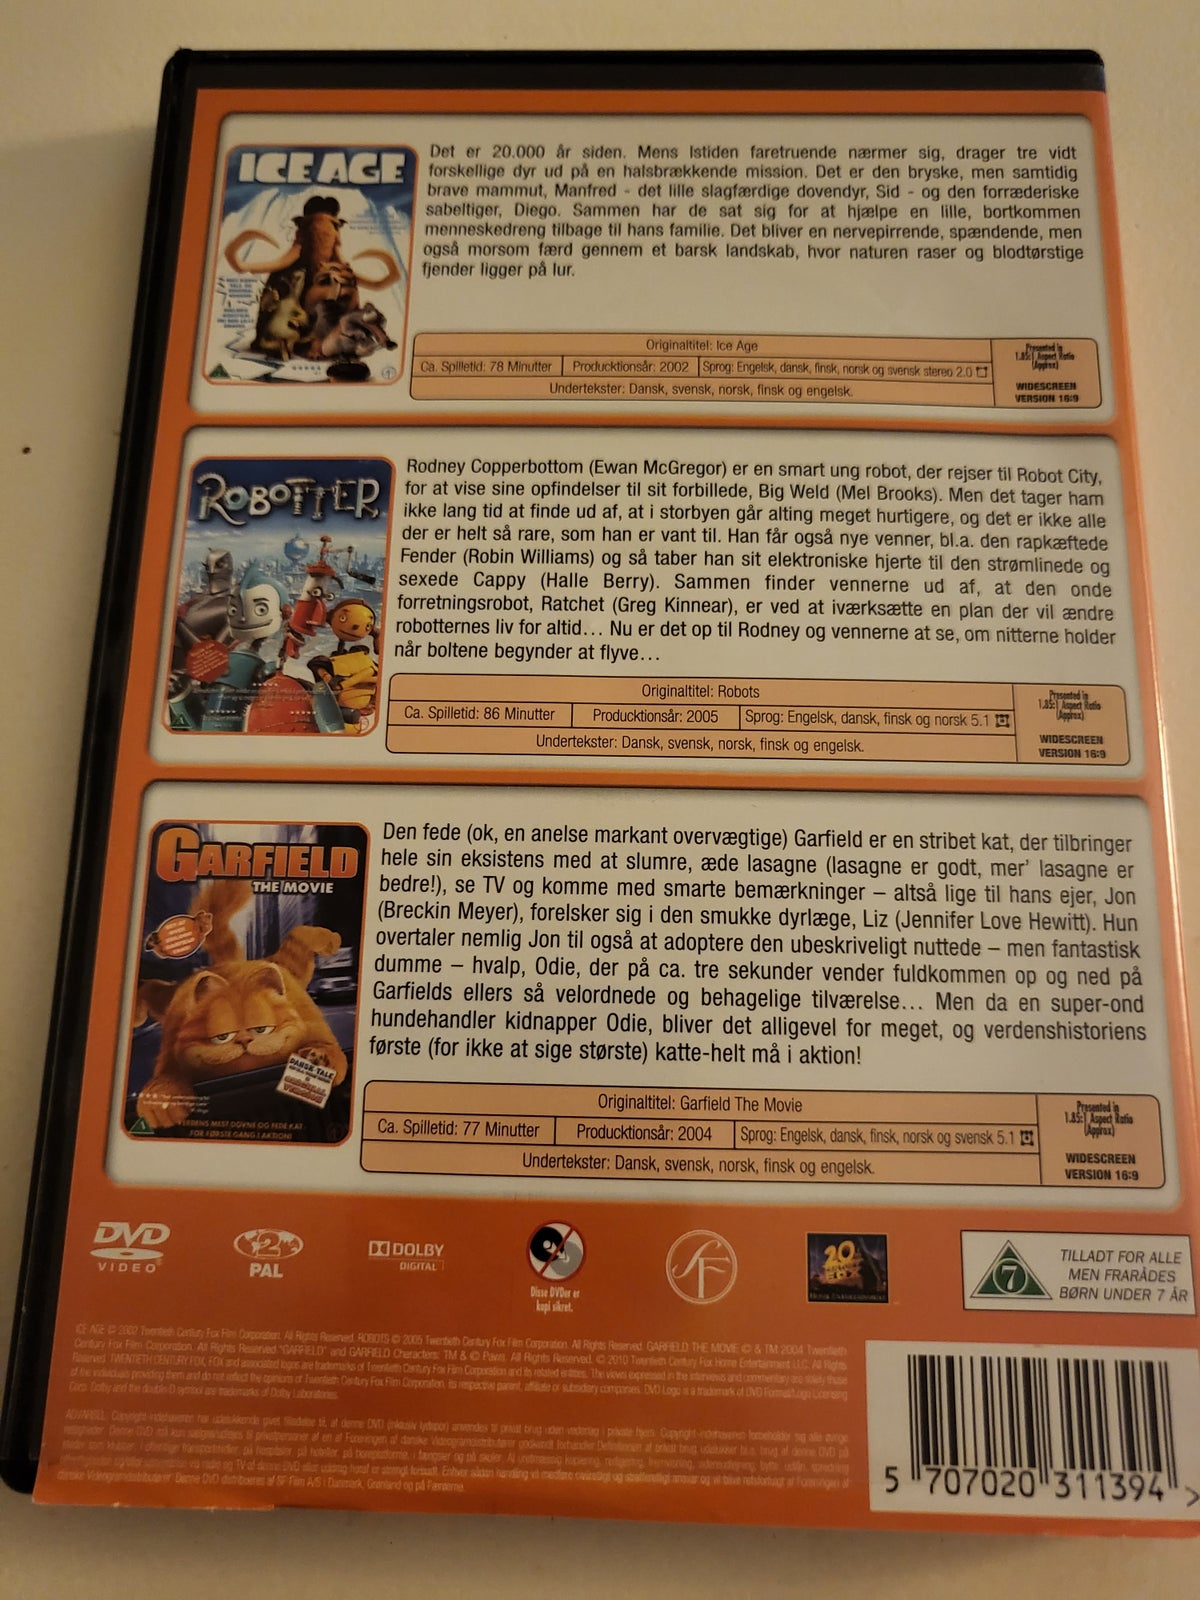 Ice Age - Robotter - Garfield, DVD, animation